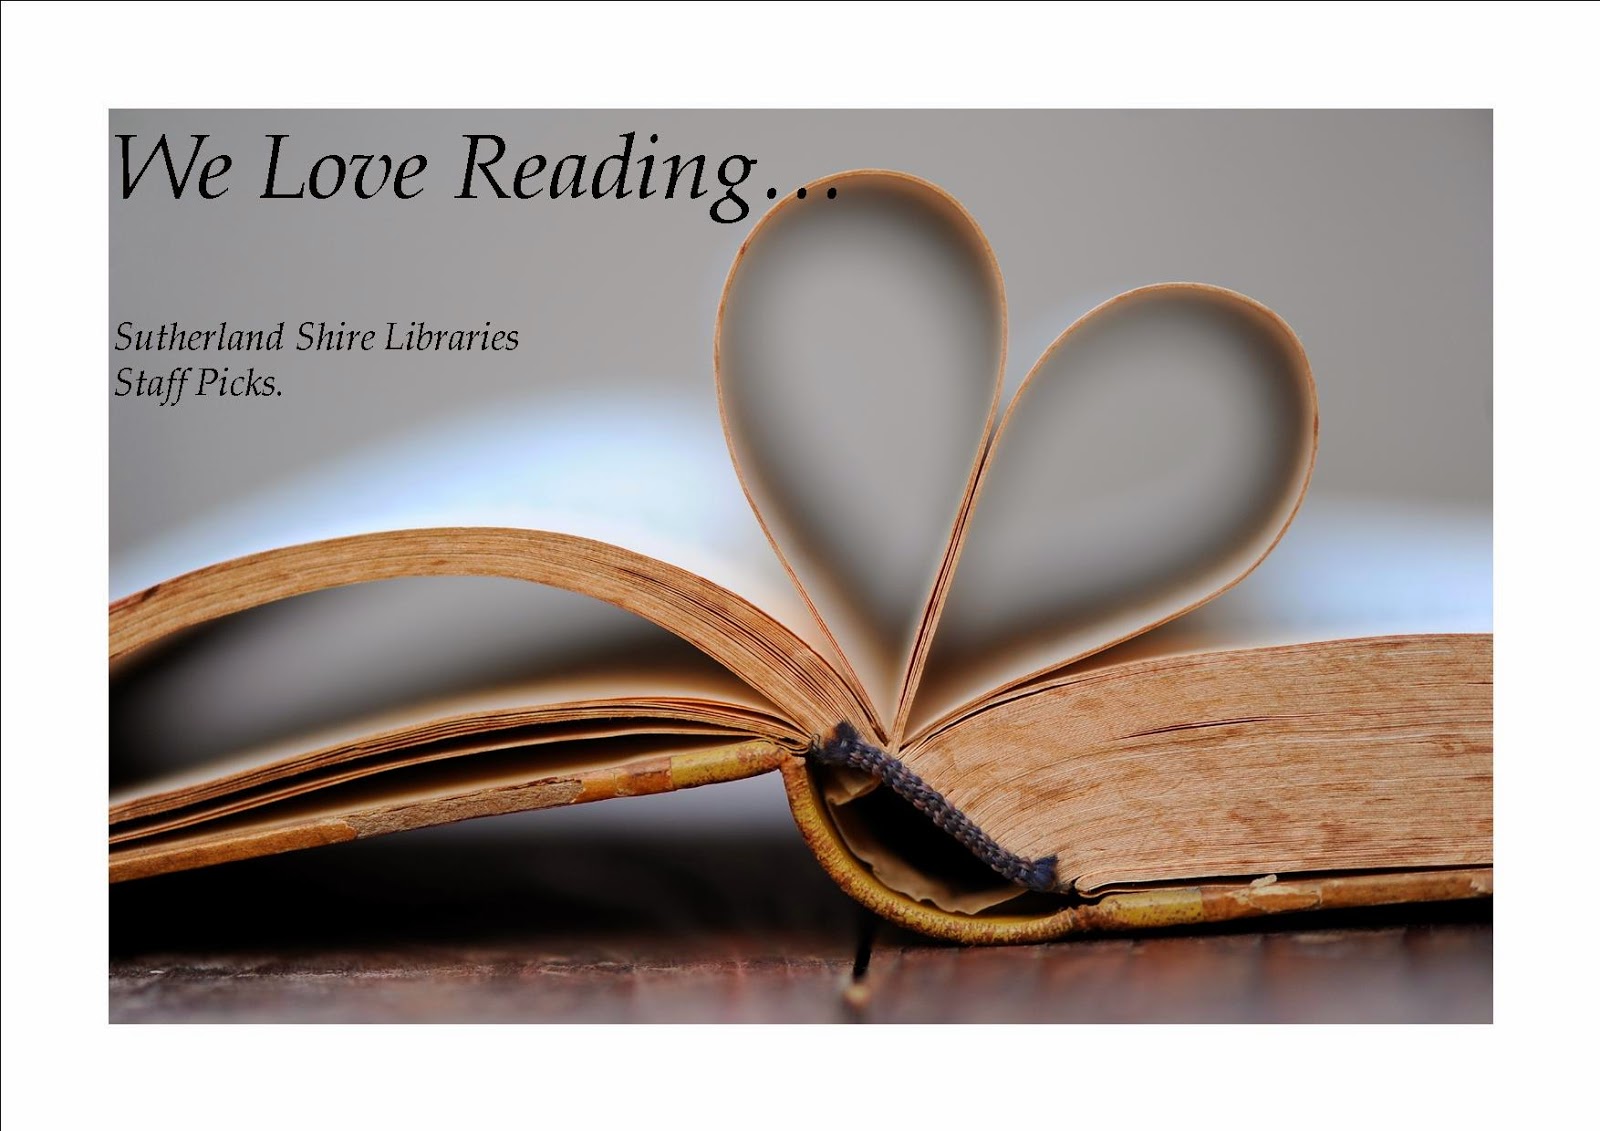 We love reading...staff picks January 2015.